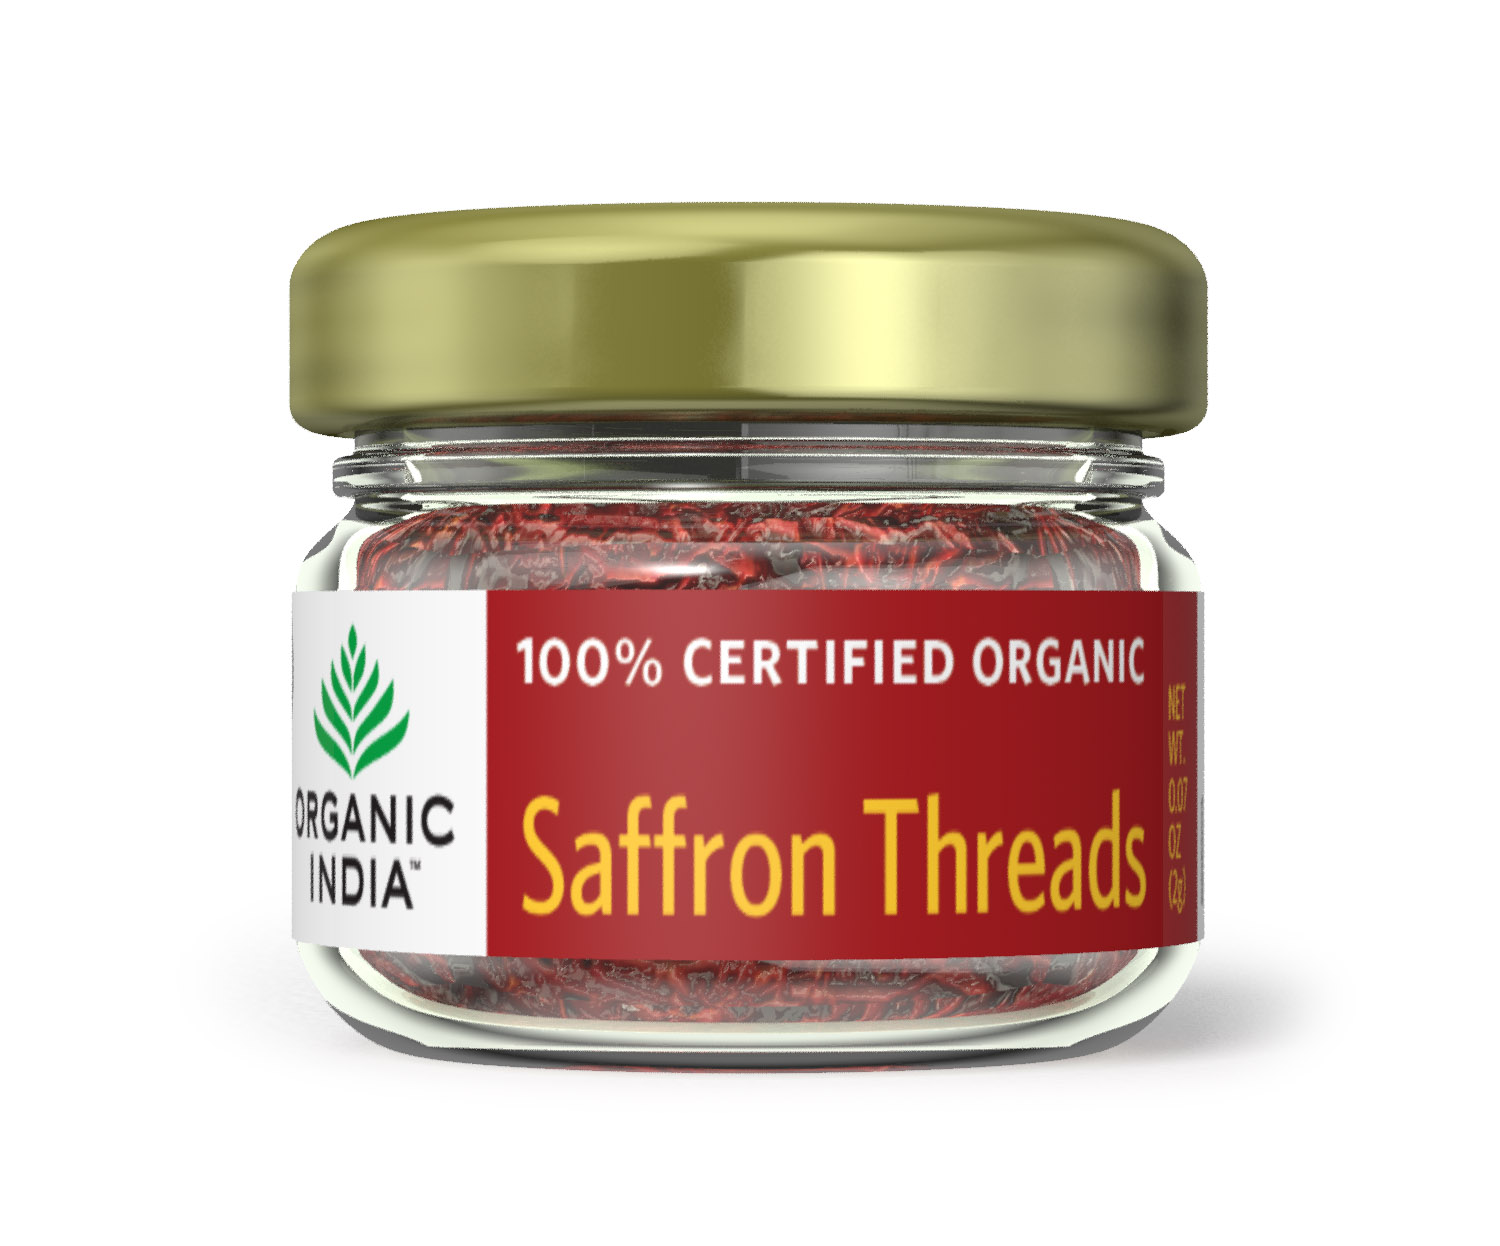 Buy Organic India Saffron at Best Price Online